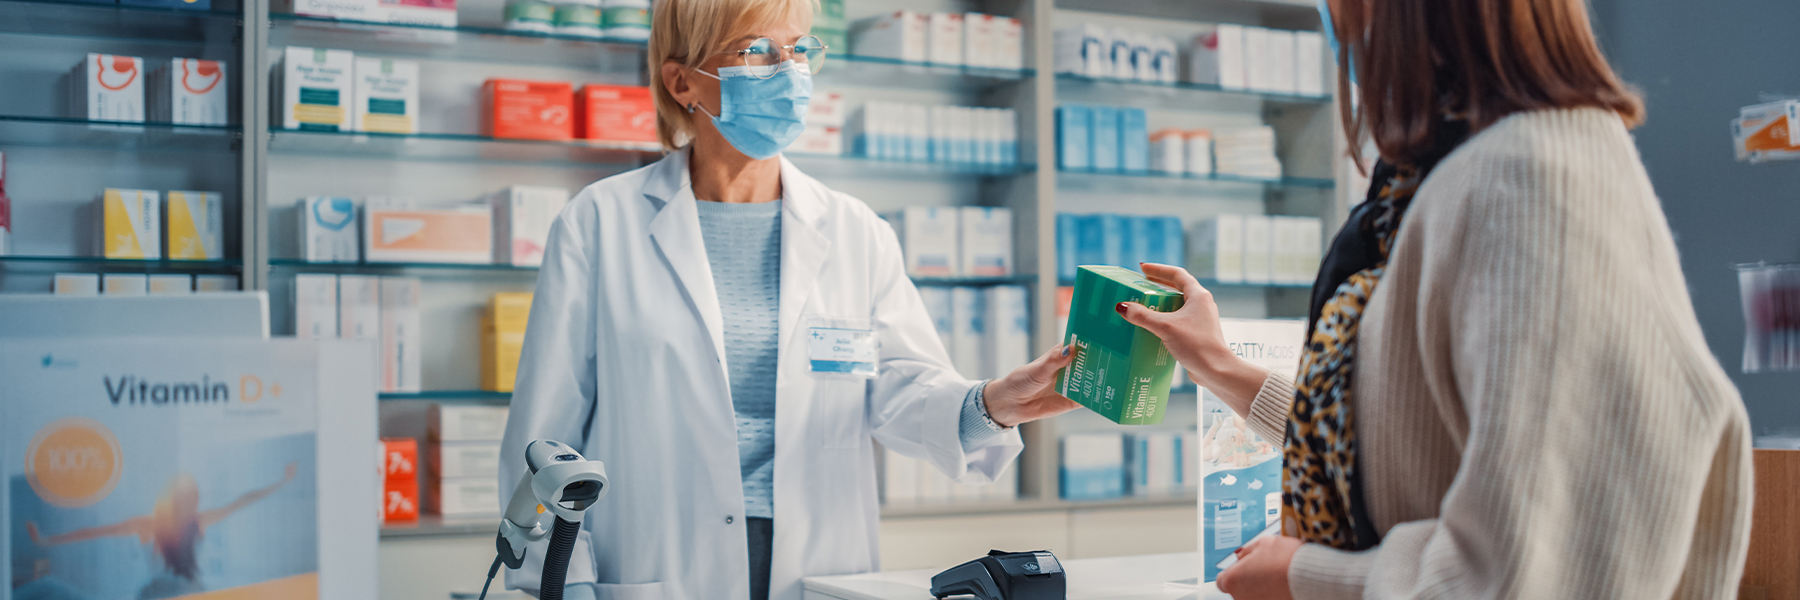 Retail Pharmacy Industry Analysis